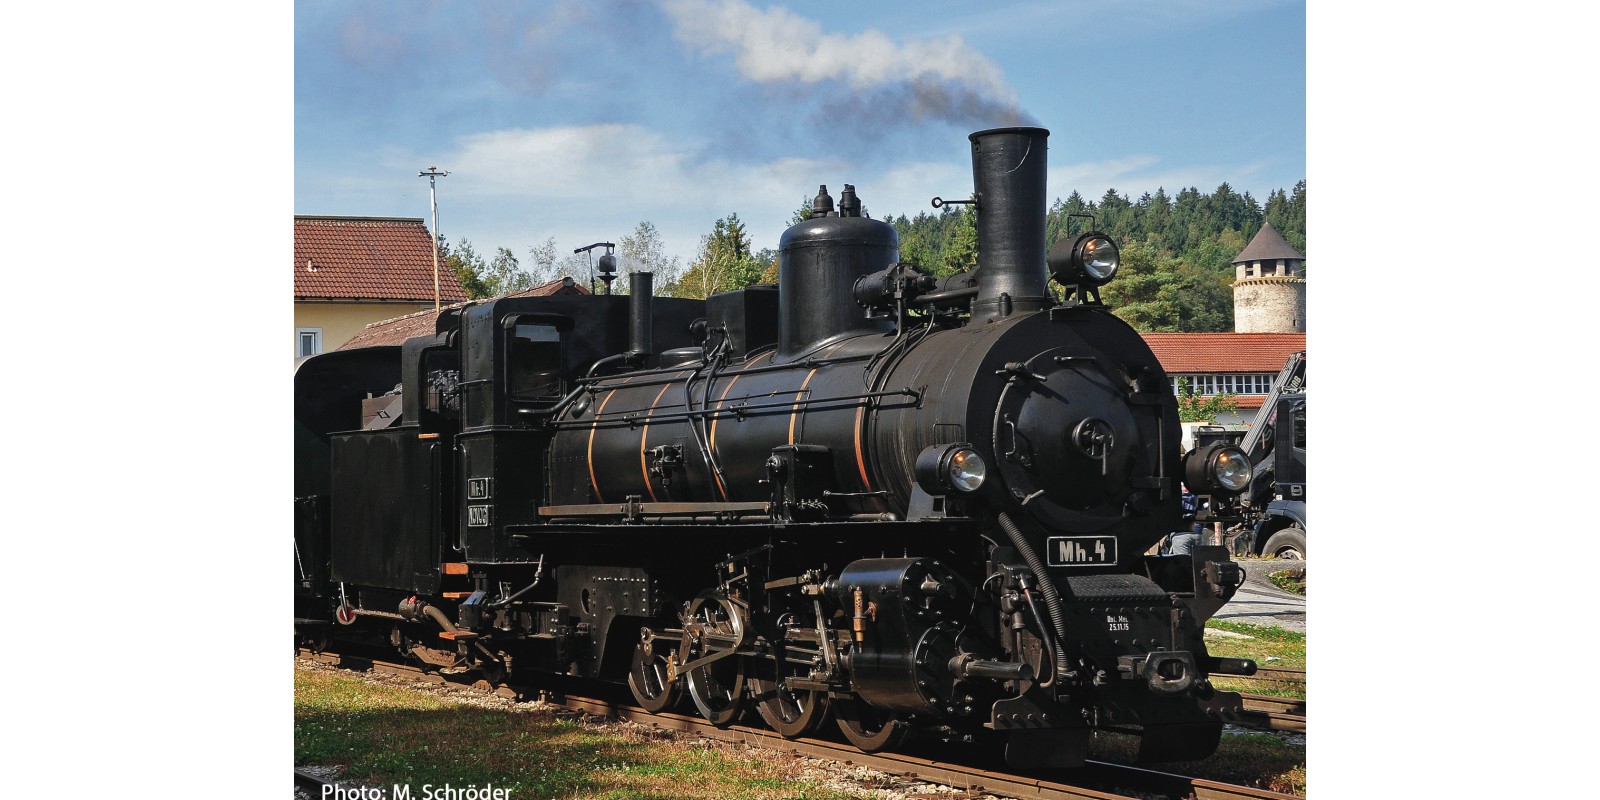 RO33273 - Steam locomotive Mh.4, NÖVOG